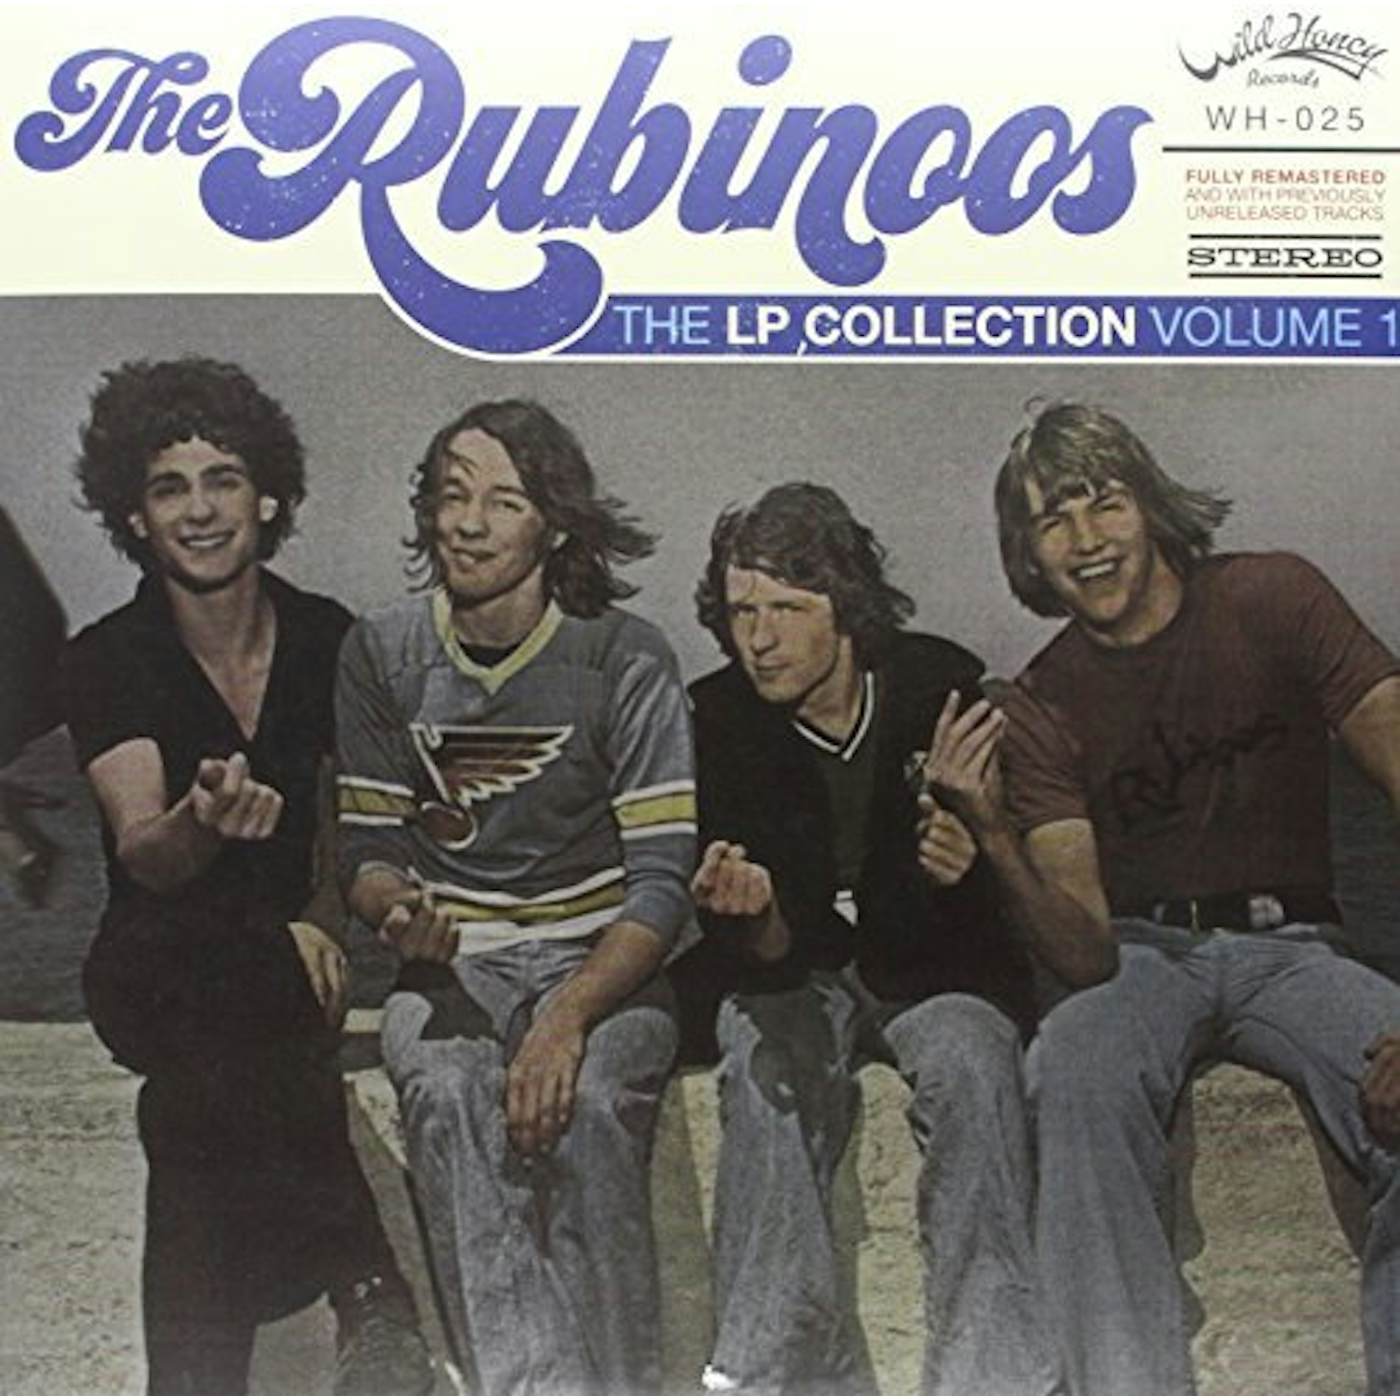 The Rubinoos LP COLLECTION VOL 1 Vinyl Record